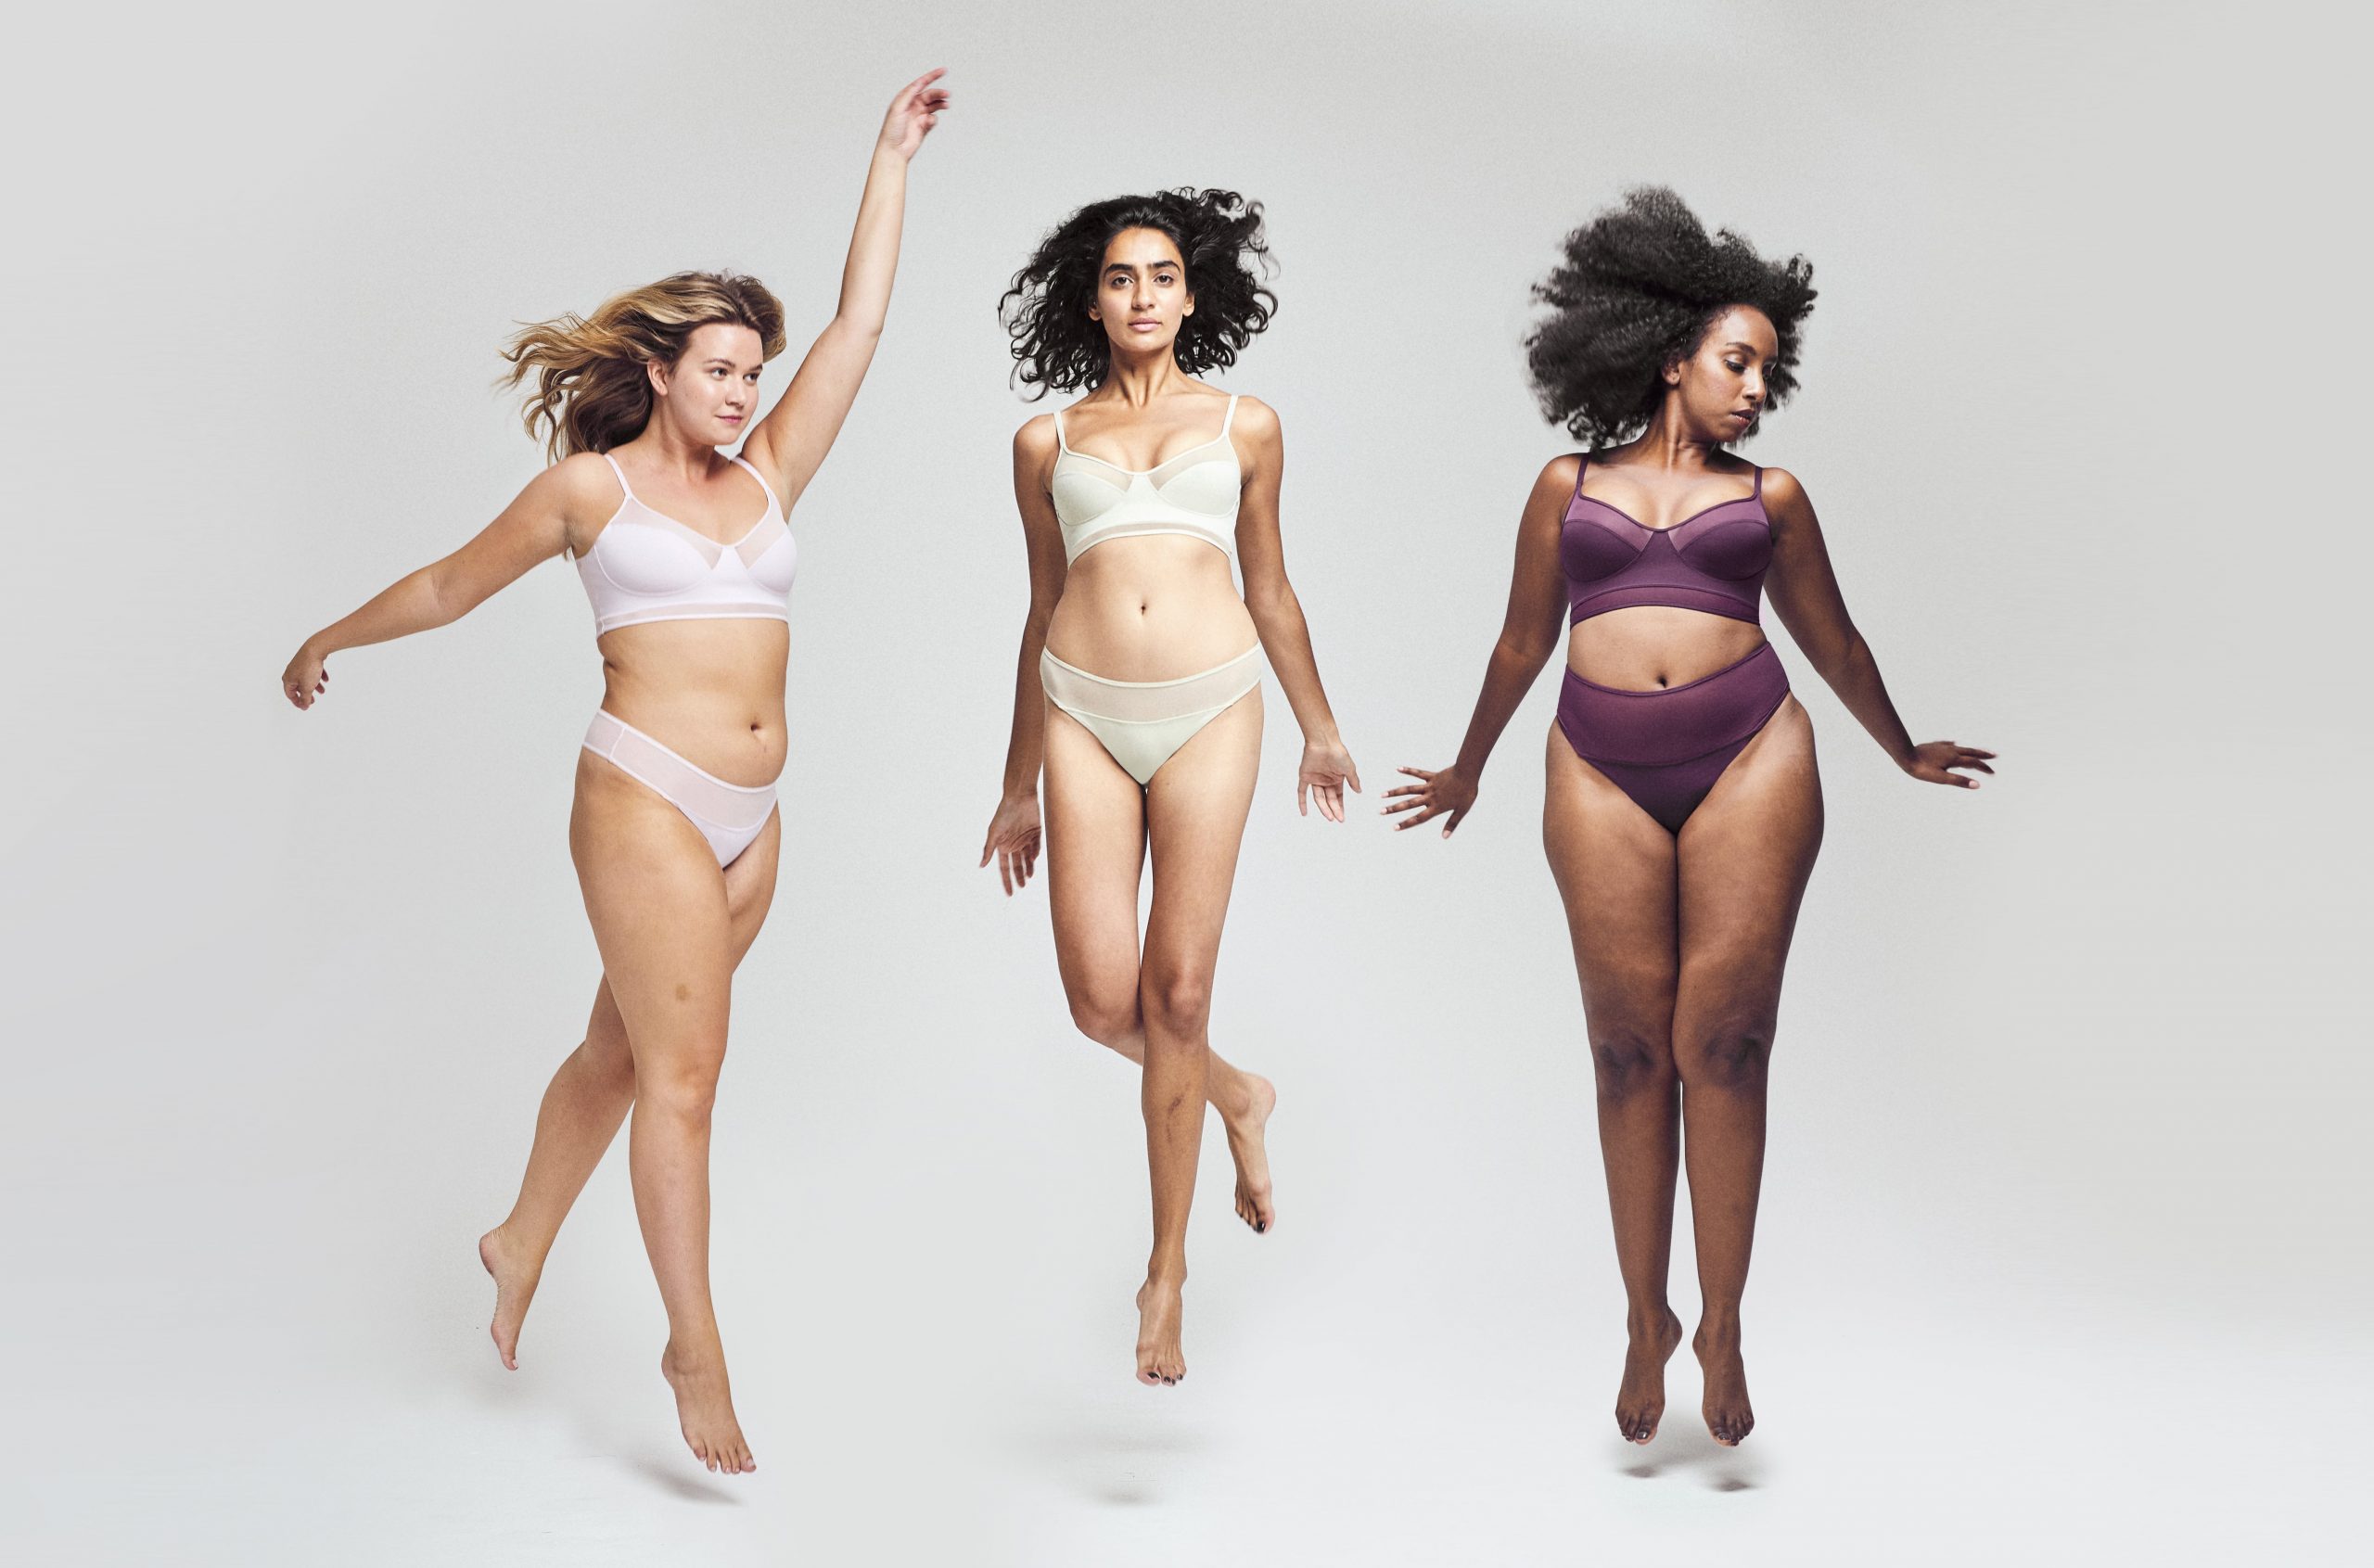 Boux Avenue launches first unretouched celebrity lingerie campaign